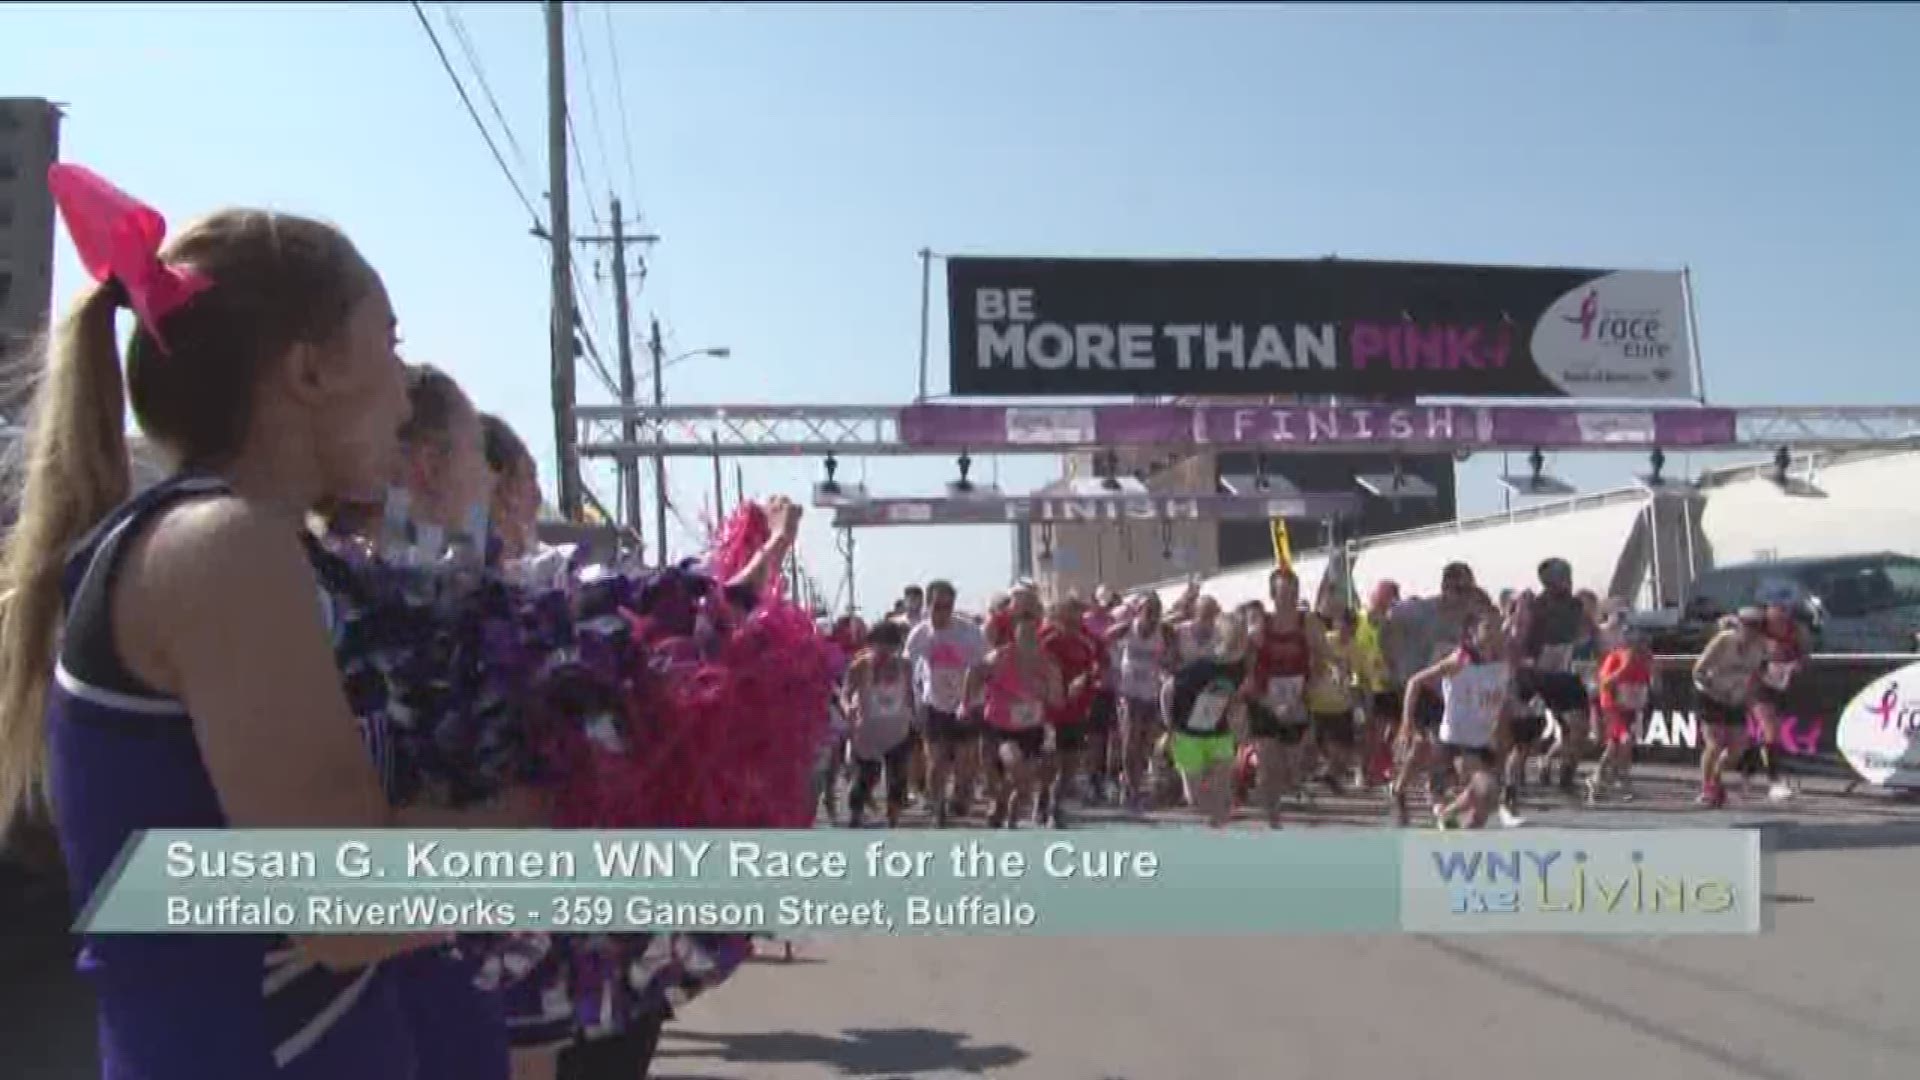 WNY Living - April 7 - Susan G. Komen Race For The Cure